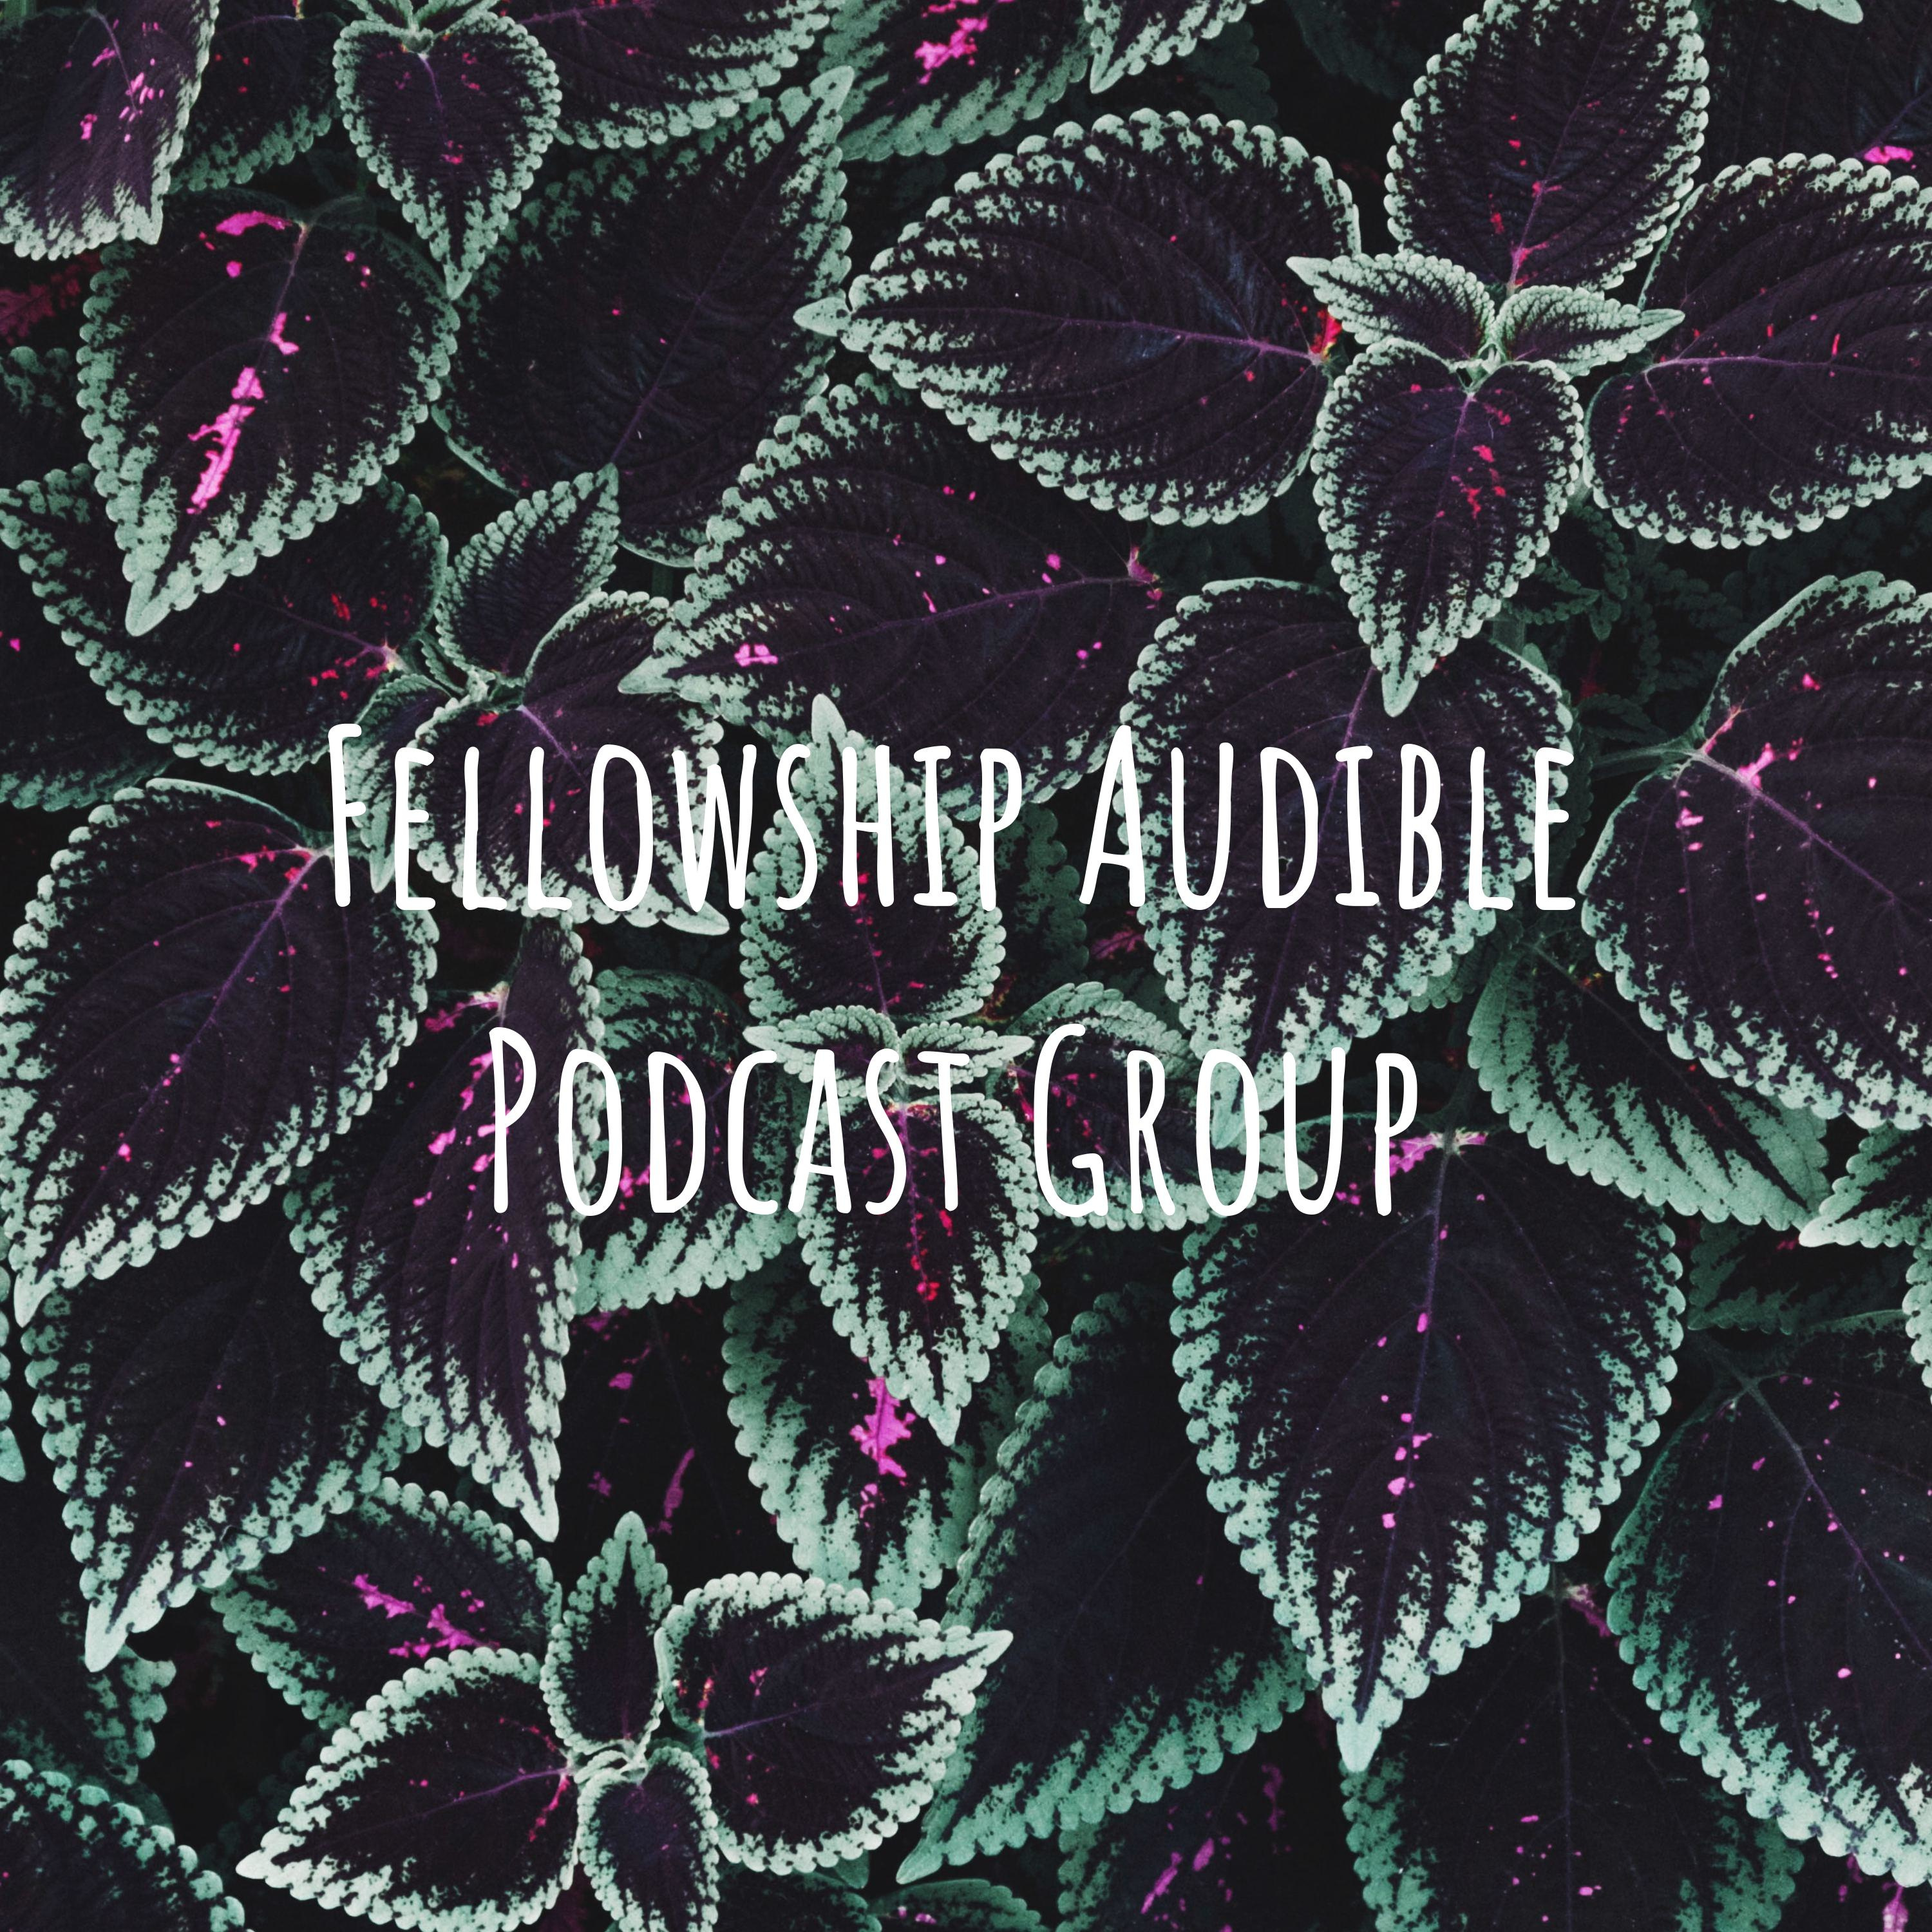 Fellowship Audio Podcast 15MAY19 | Nostalgic treasures